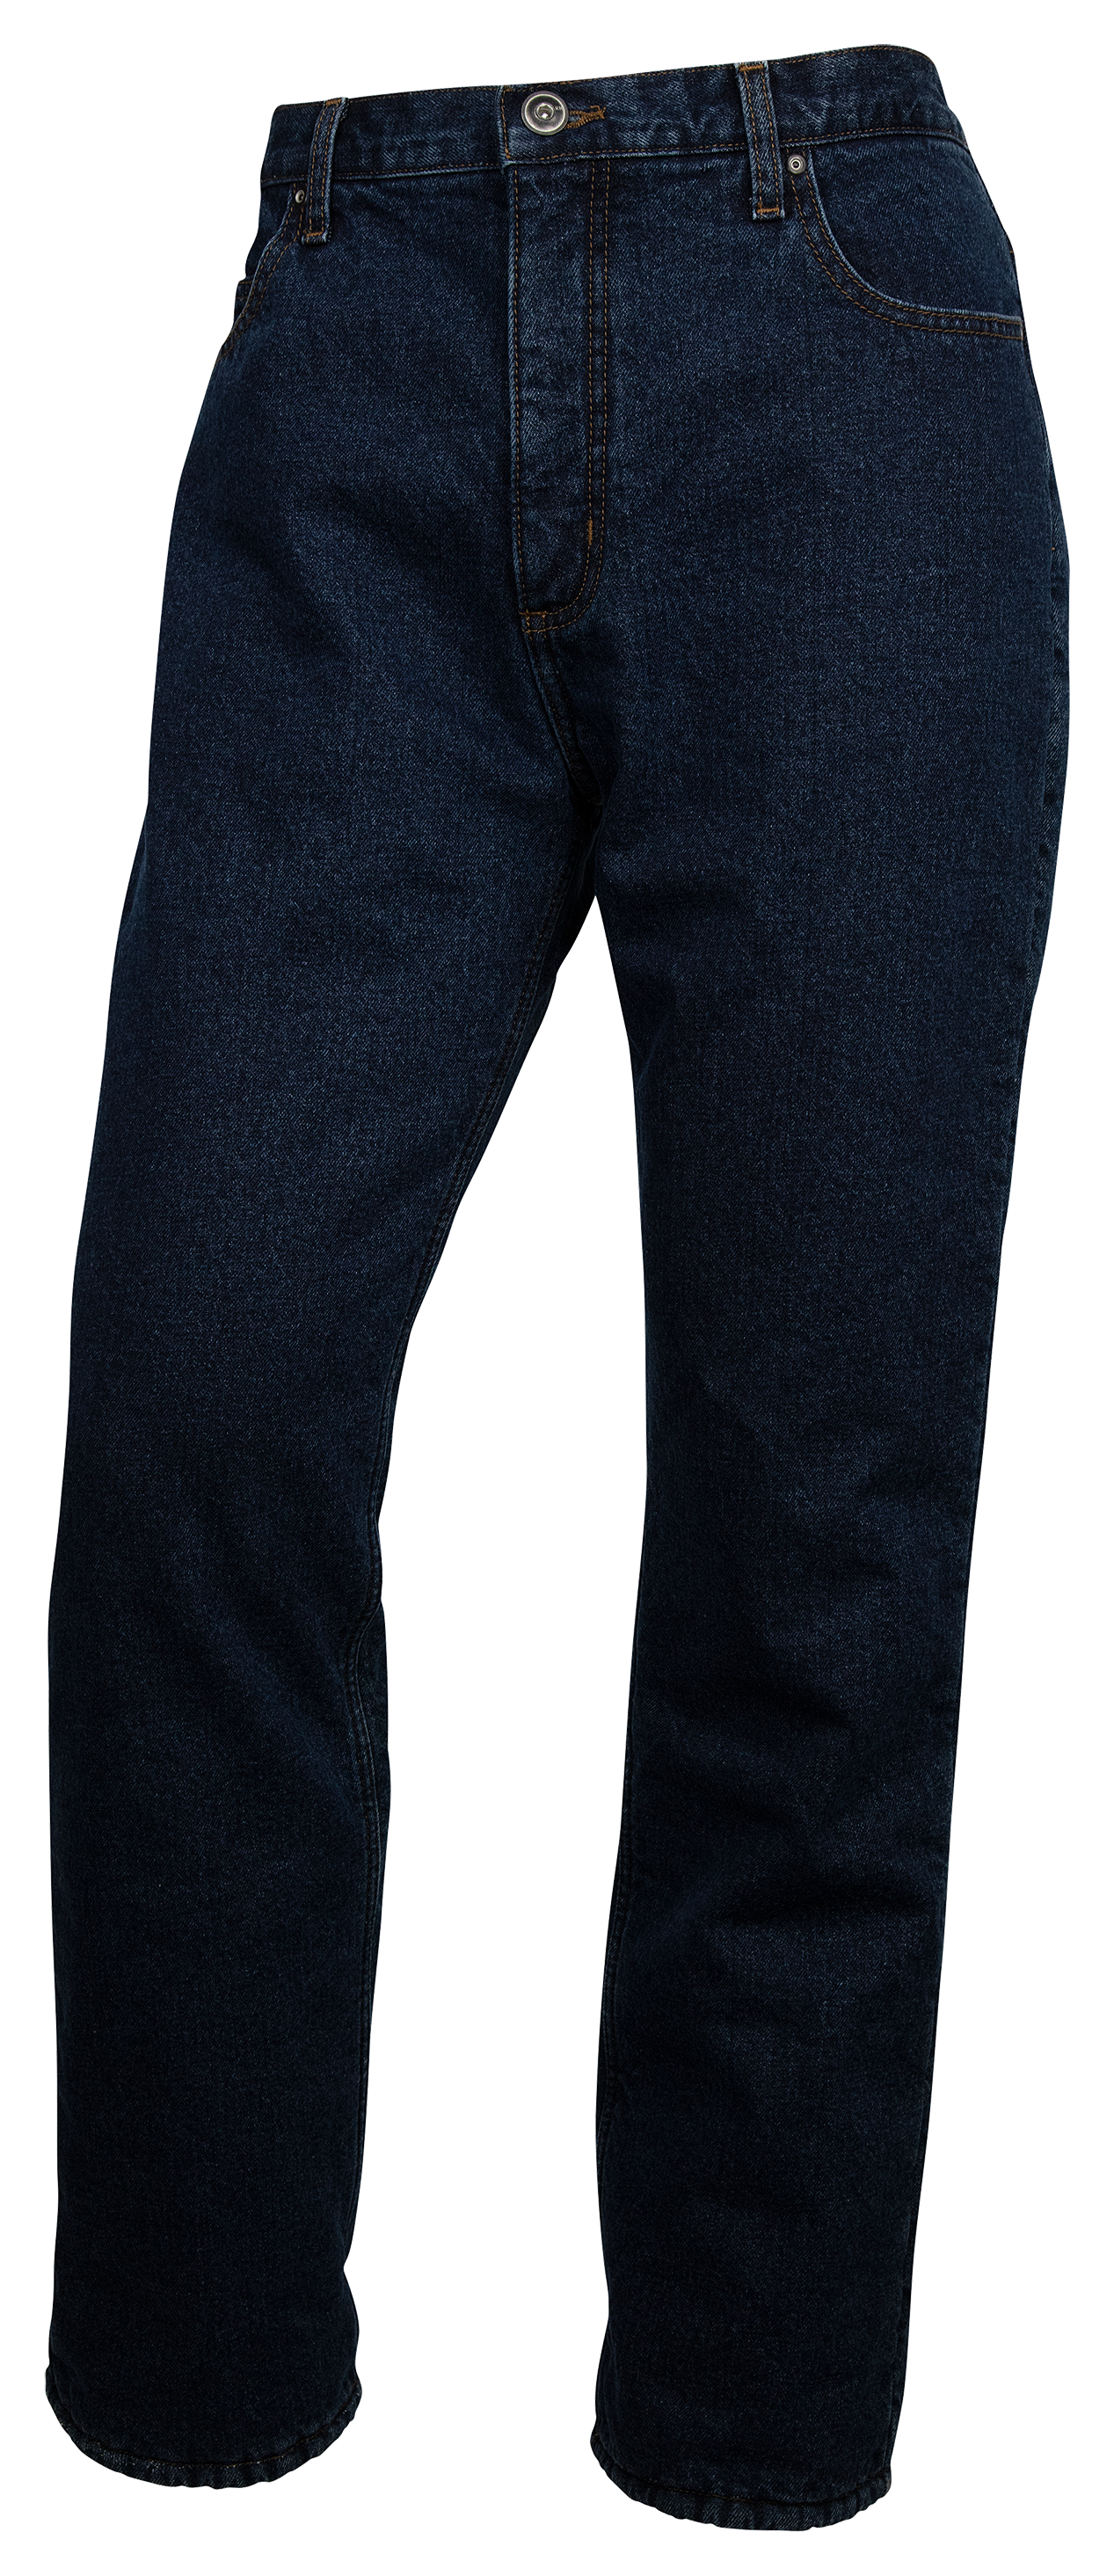 Save 50% on Fleece-Lined Denim Jeans